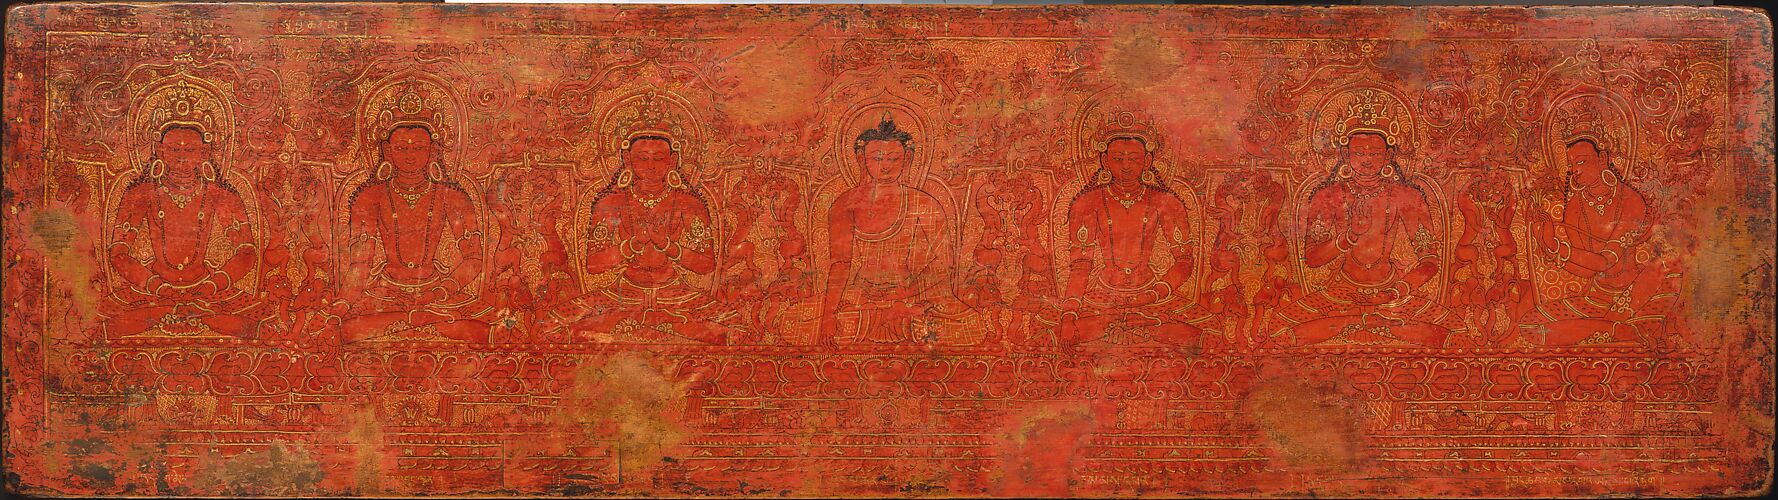 The Buddha Shakyamuni, Five Past Buddhas, and Maitreya